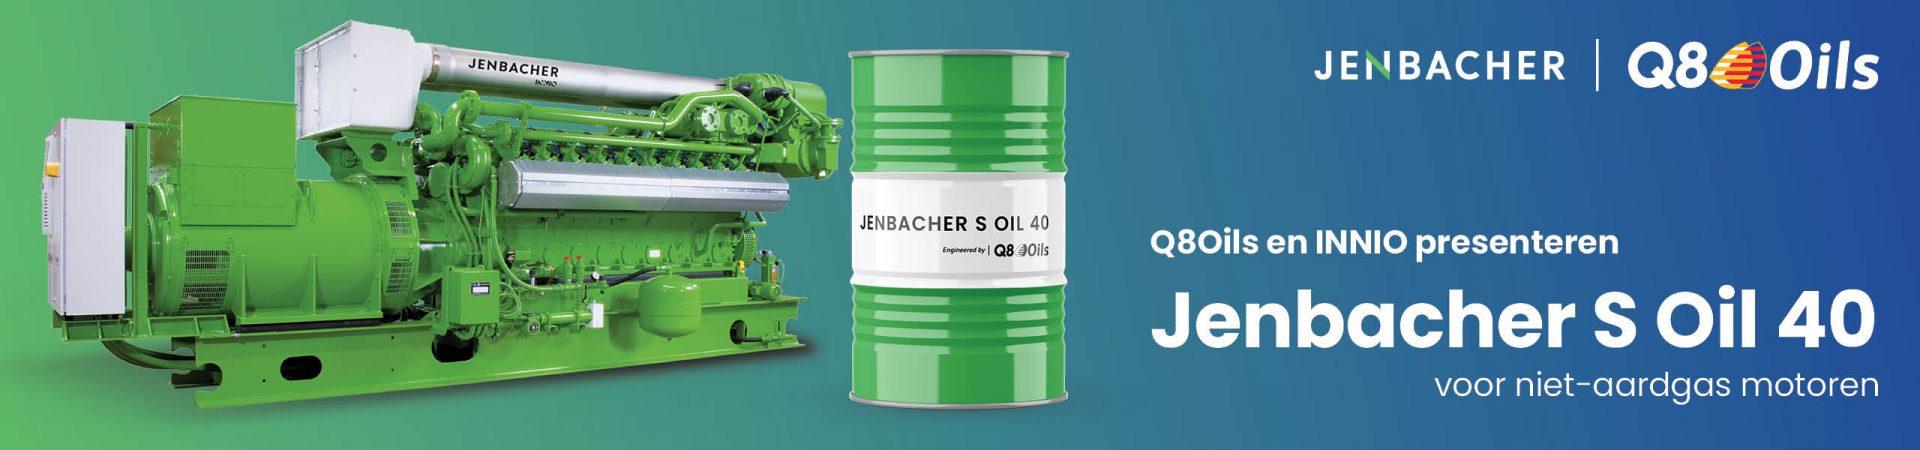 Jenbacher S Oil 40 - NL